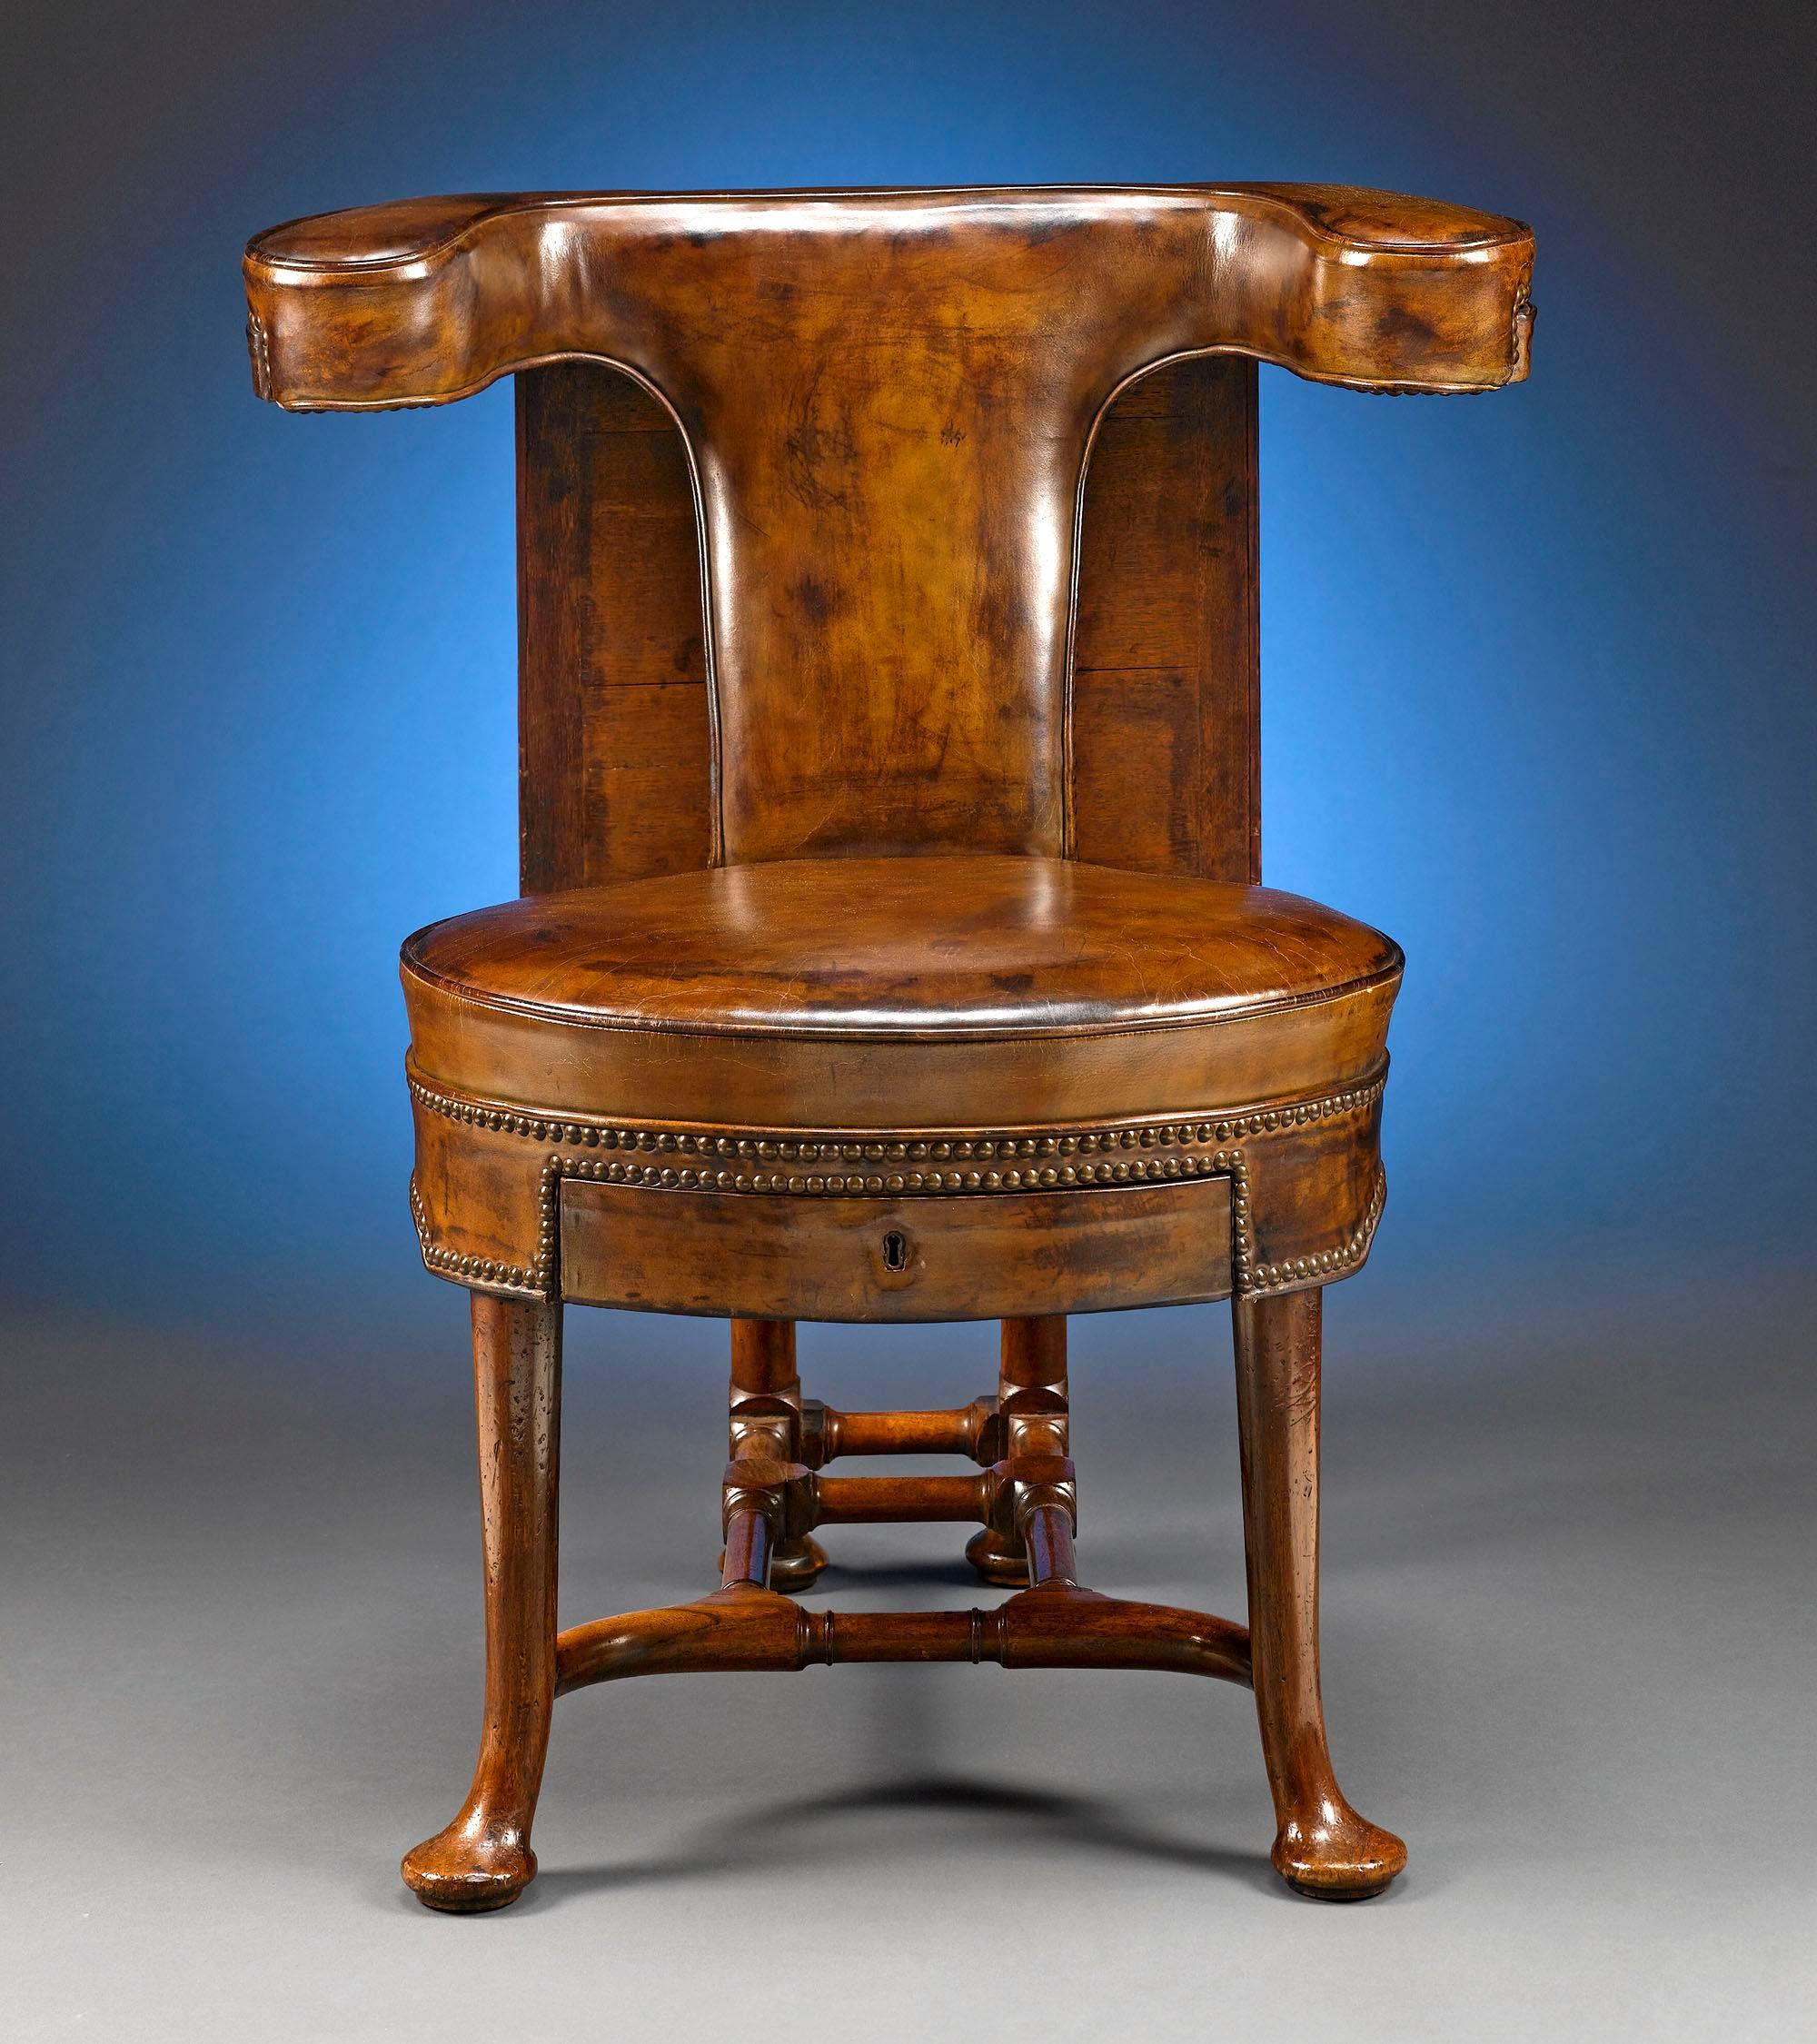 18th century reading chair